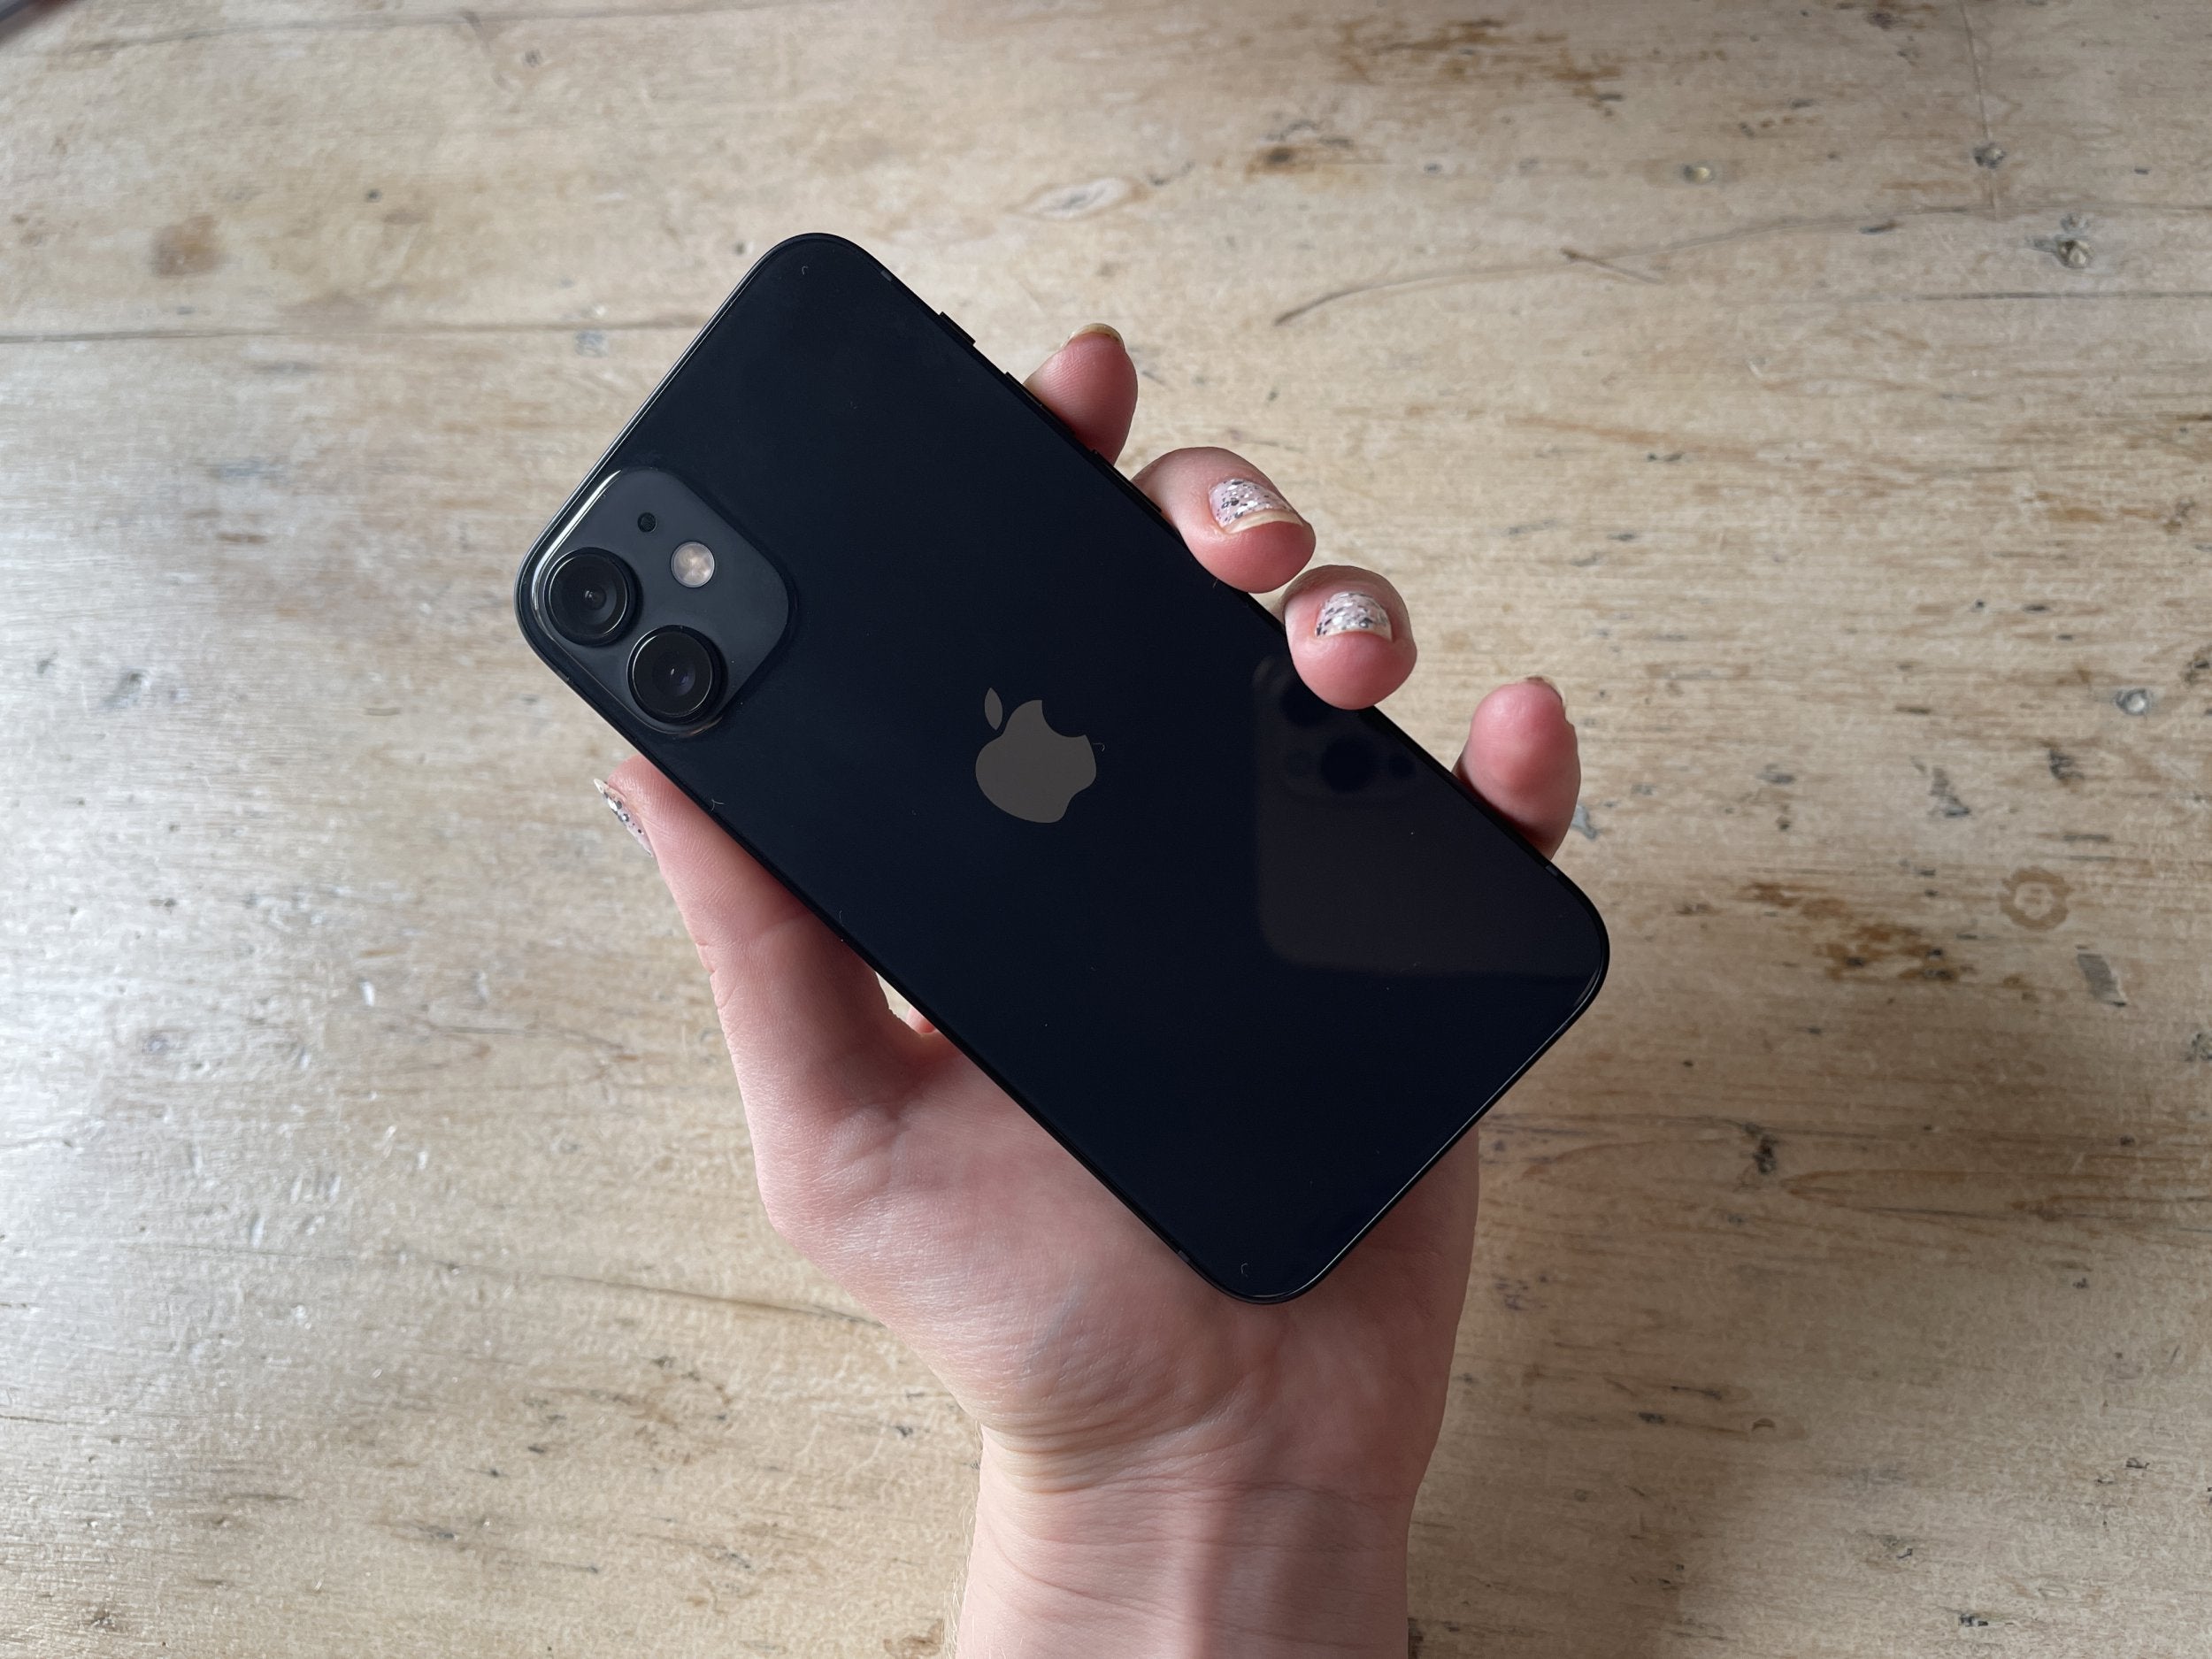 Apple iPhone 12 Mini 128GB Black New Case, Glass Screen Protector & Shipping (Good)